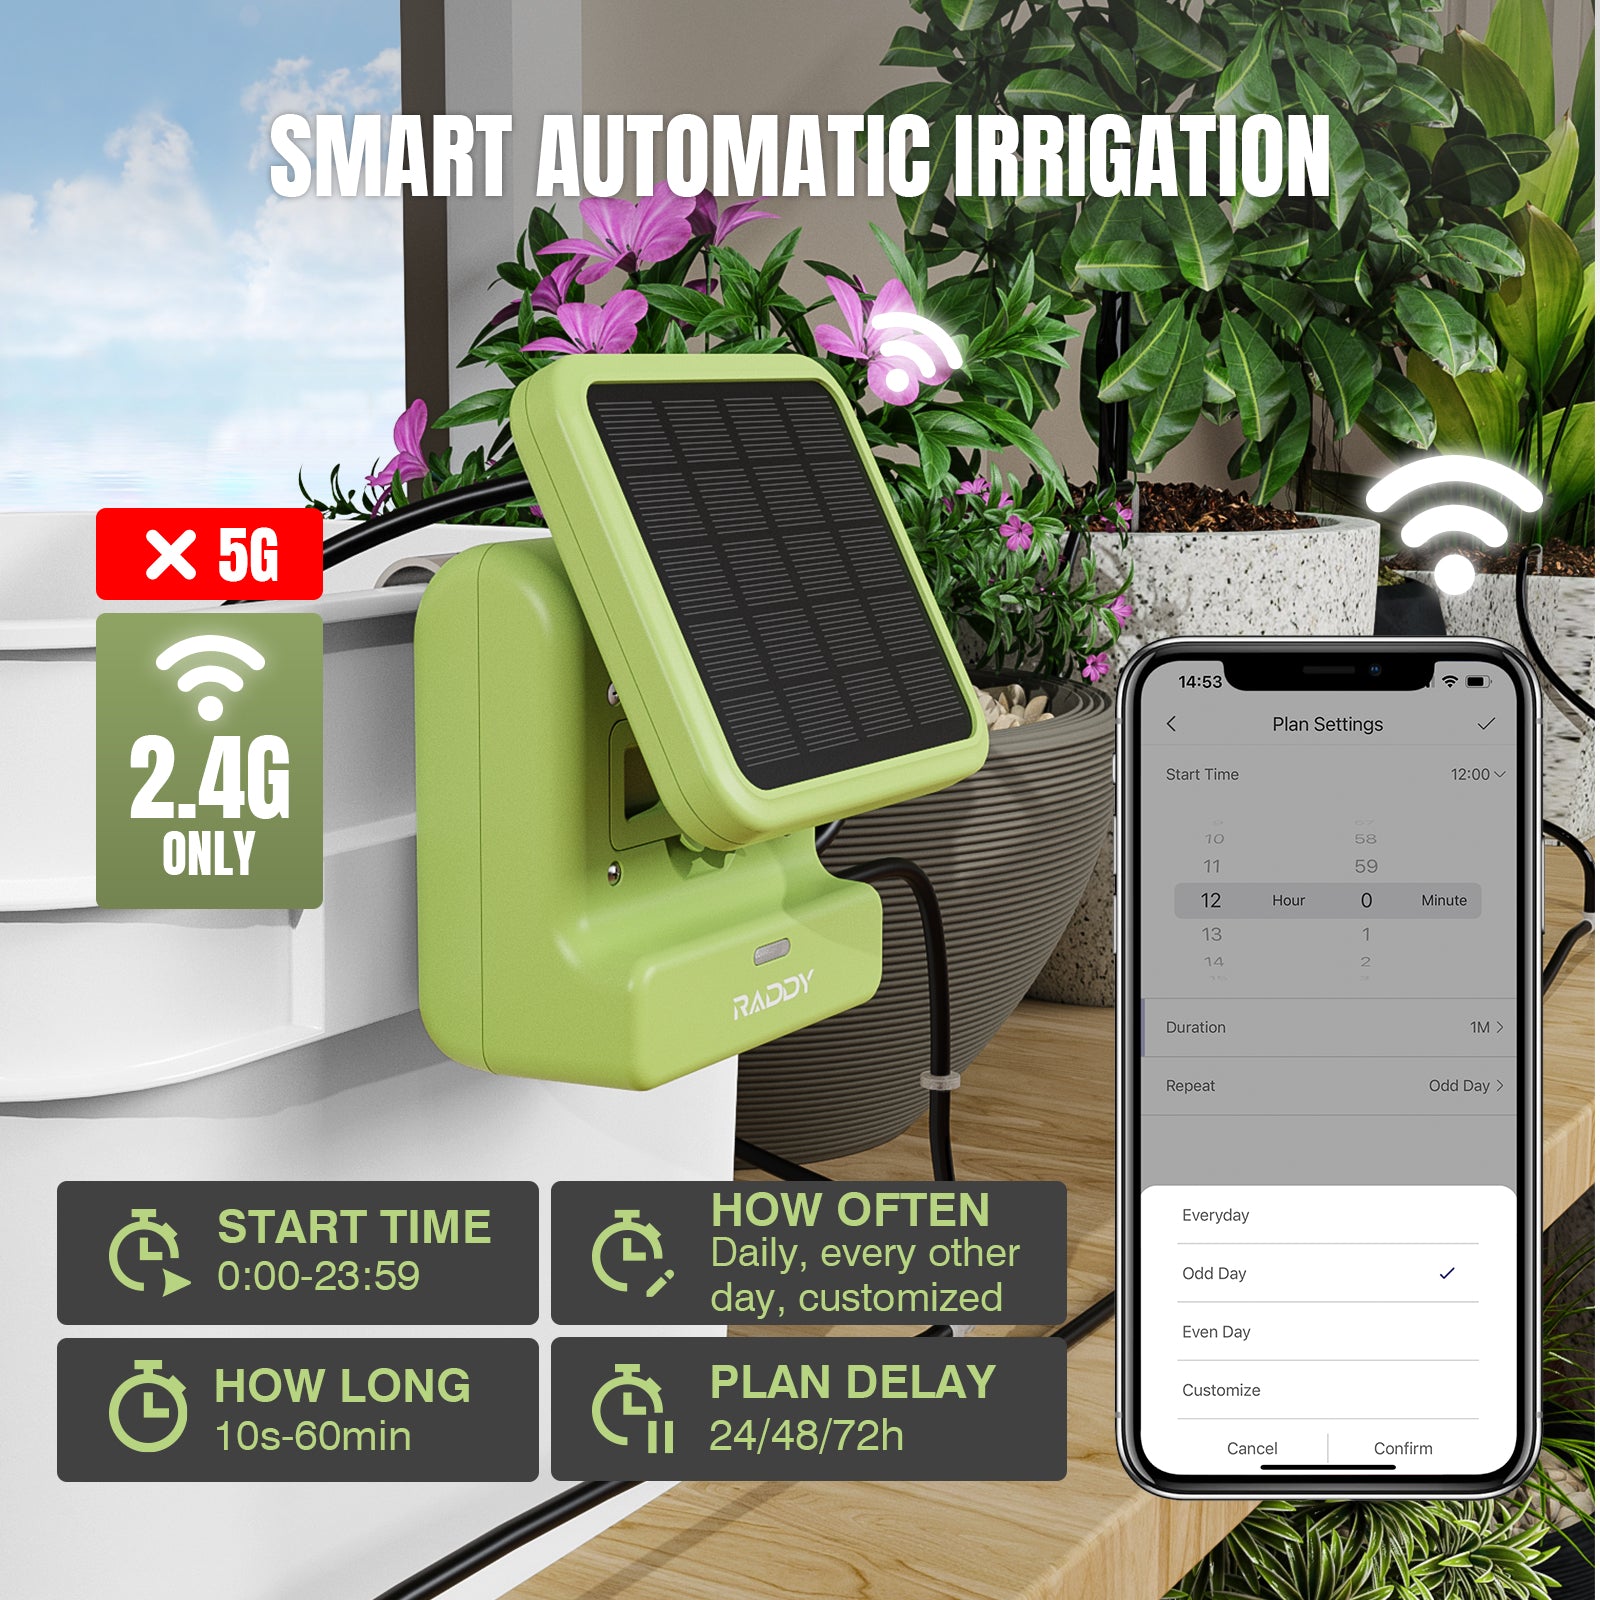 WS-2 Solar Drip Irrigation Kit